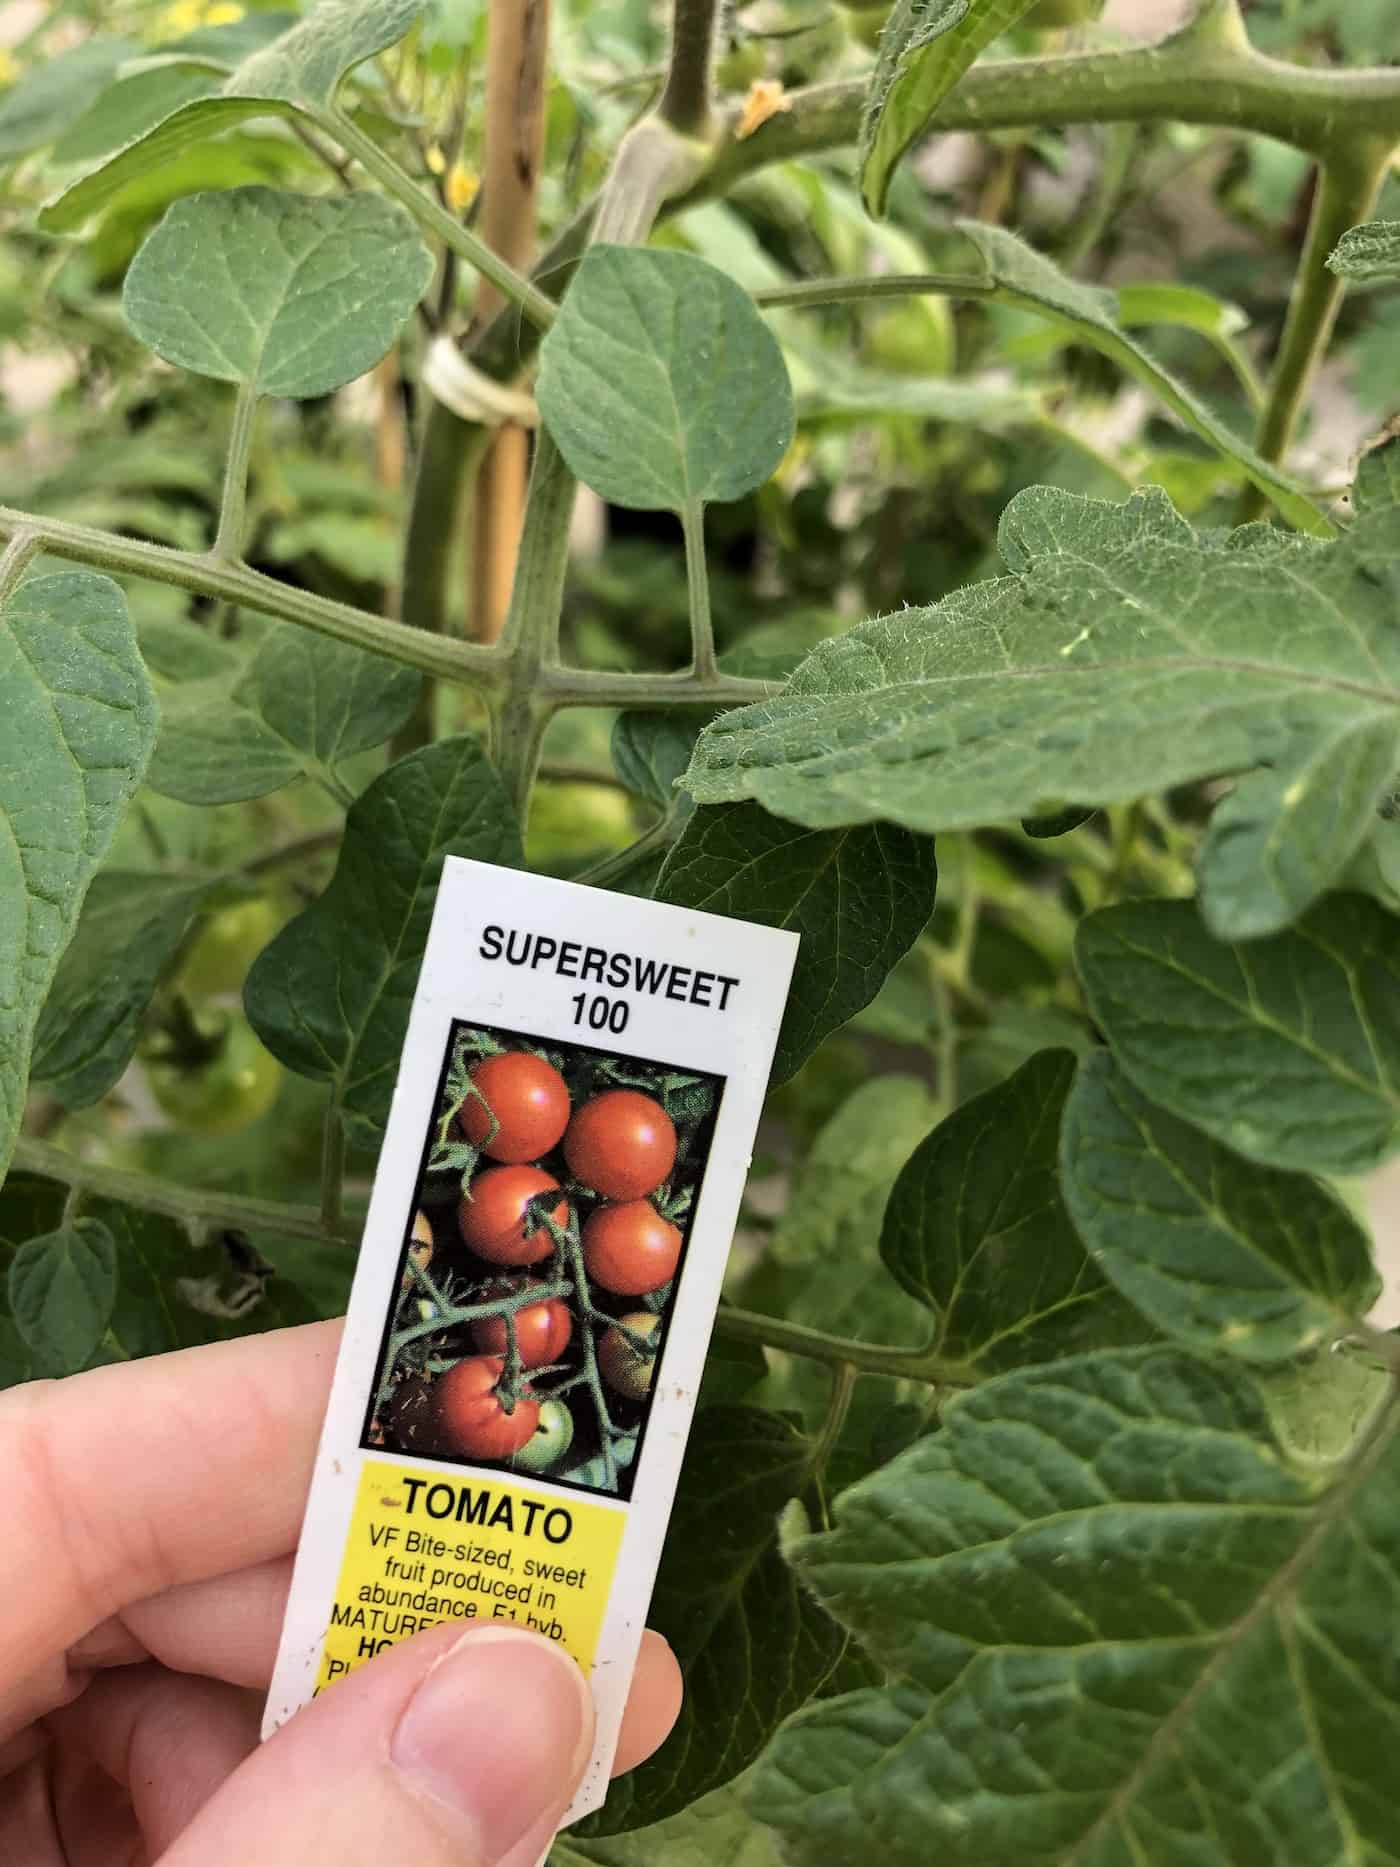 Supersweet 100 tomato plant